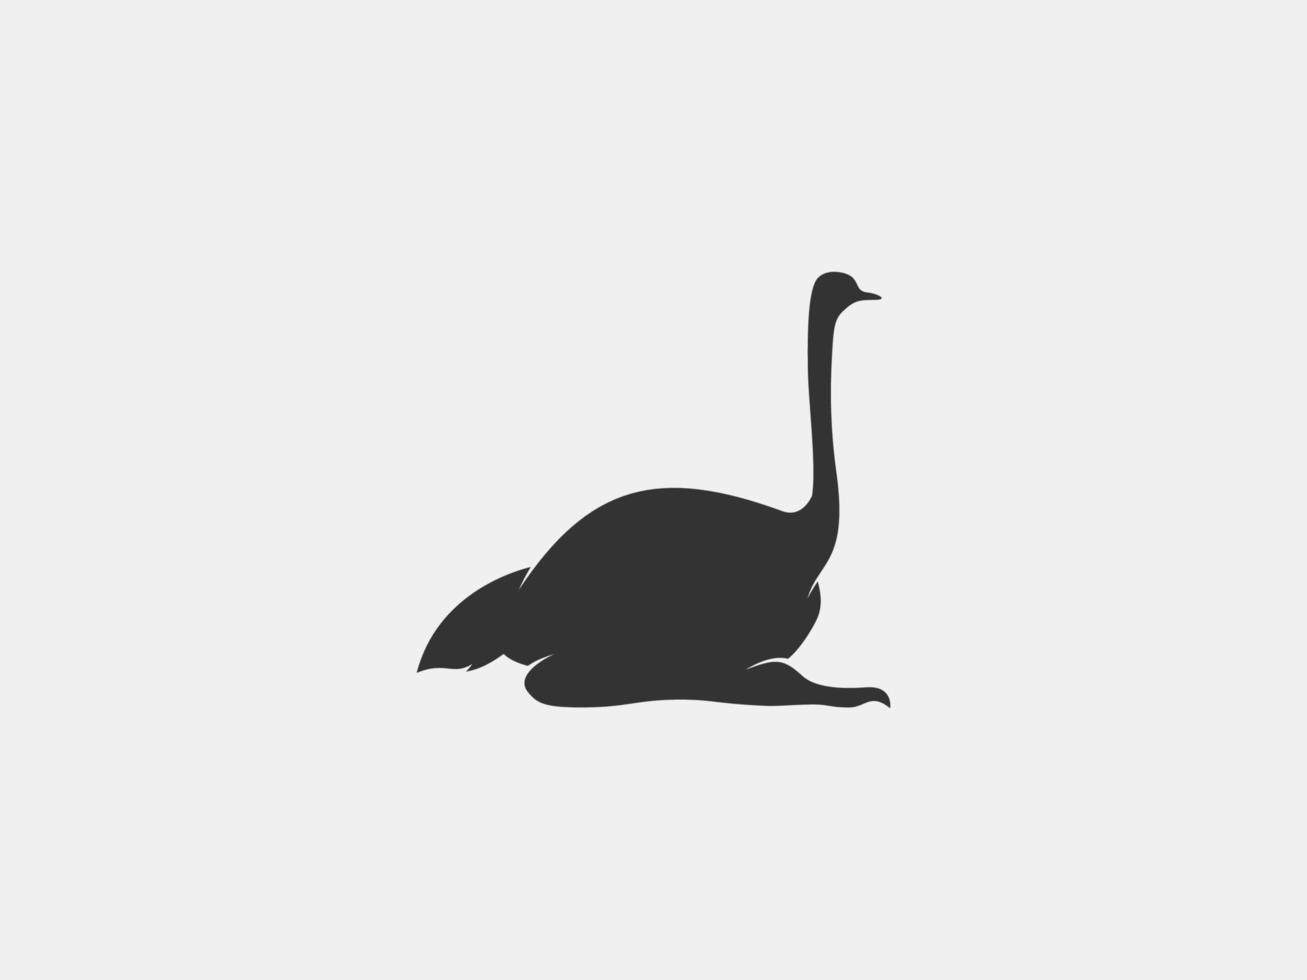 ostrich vector silhouette